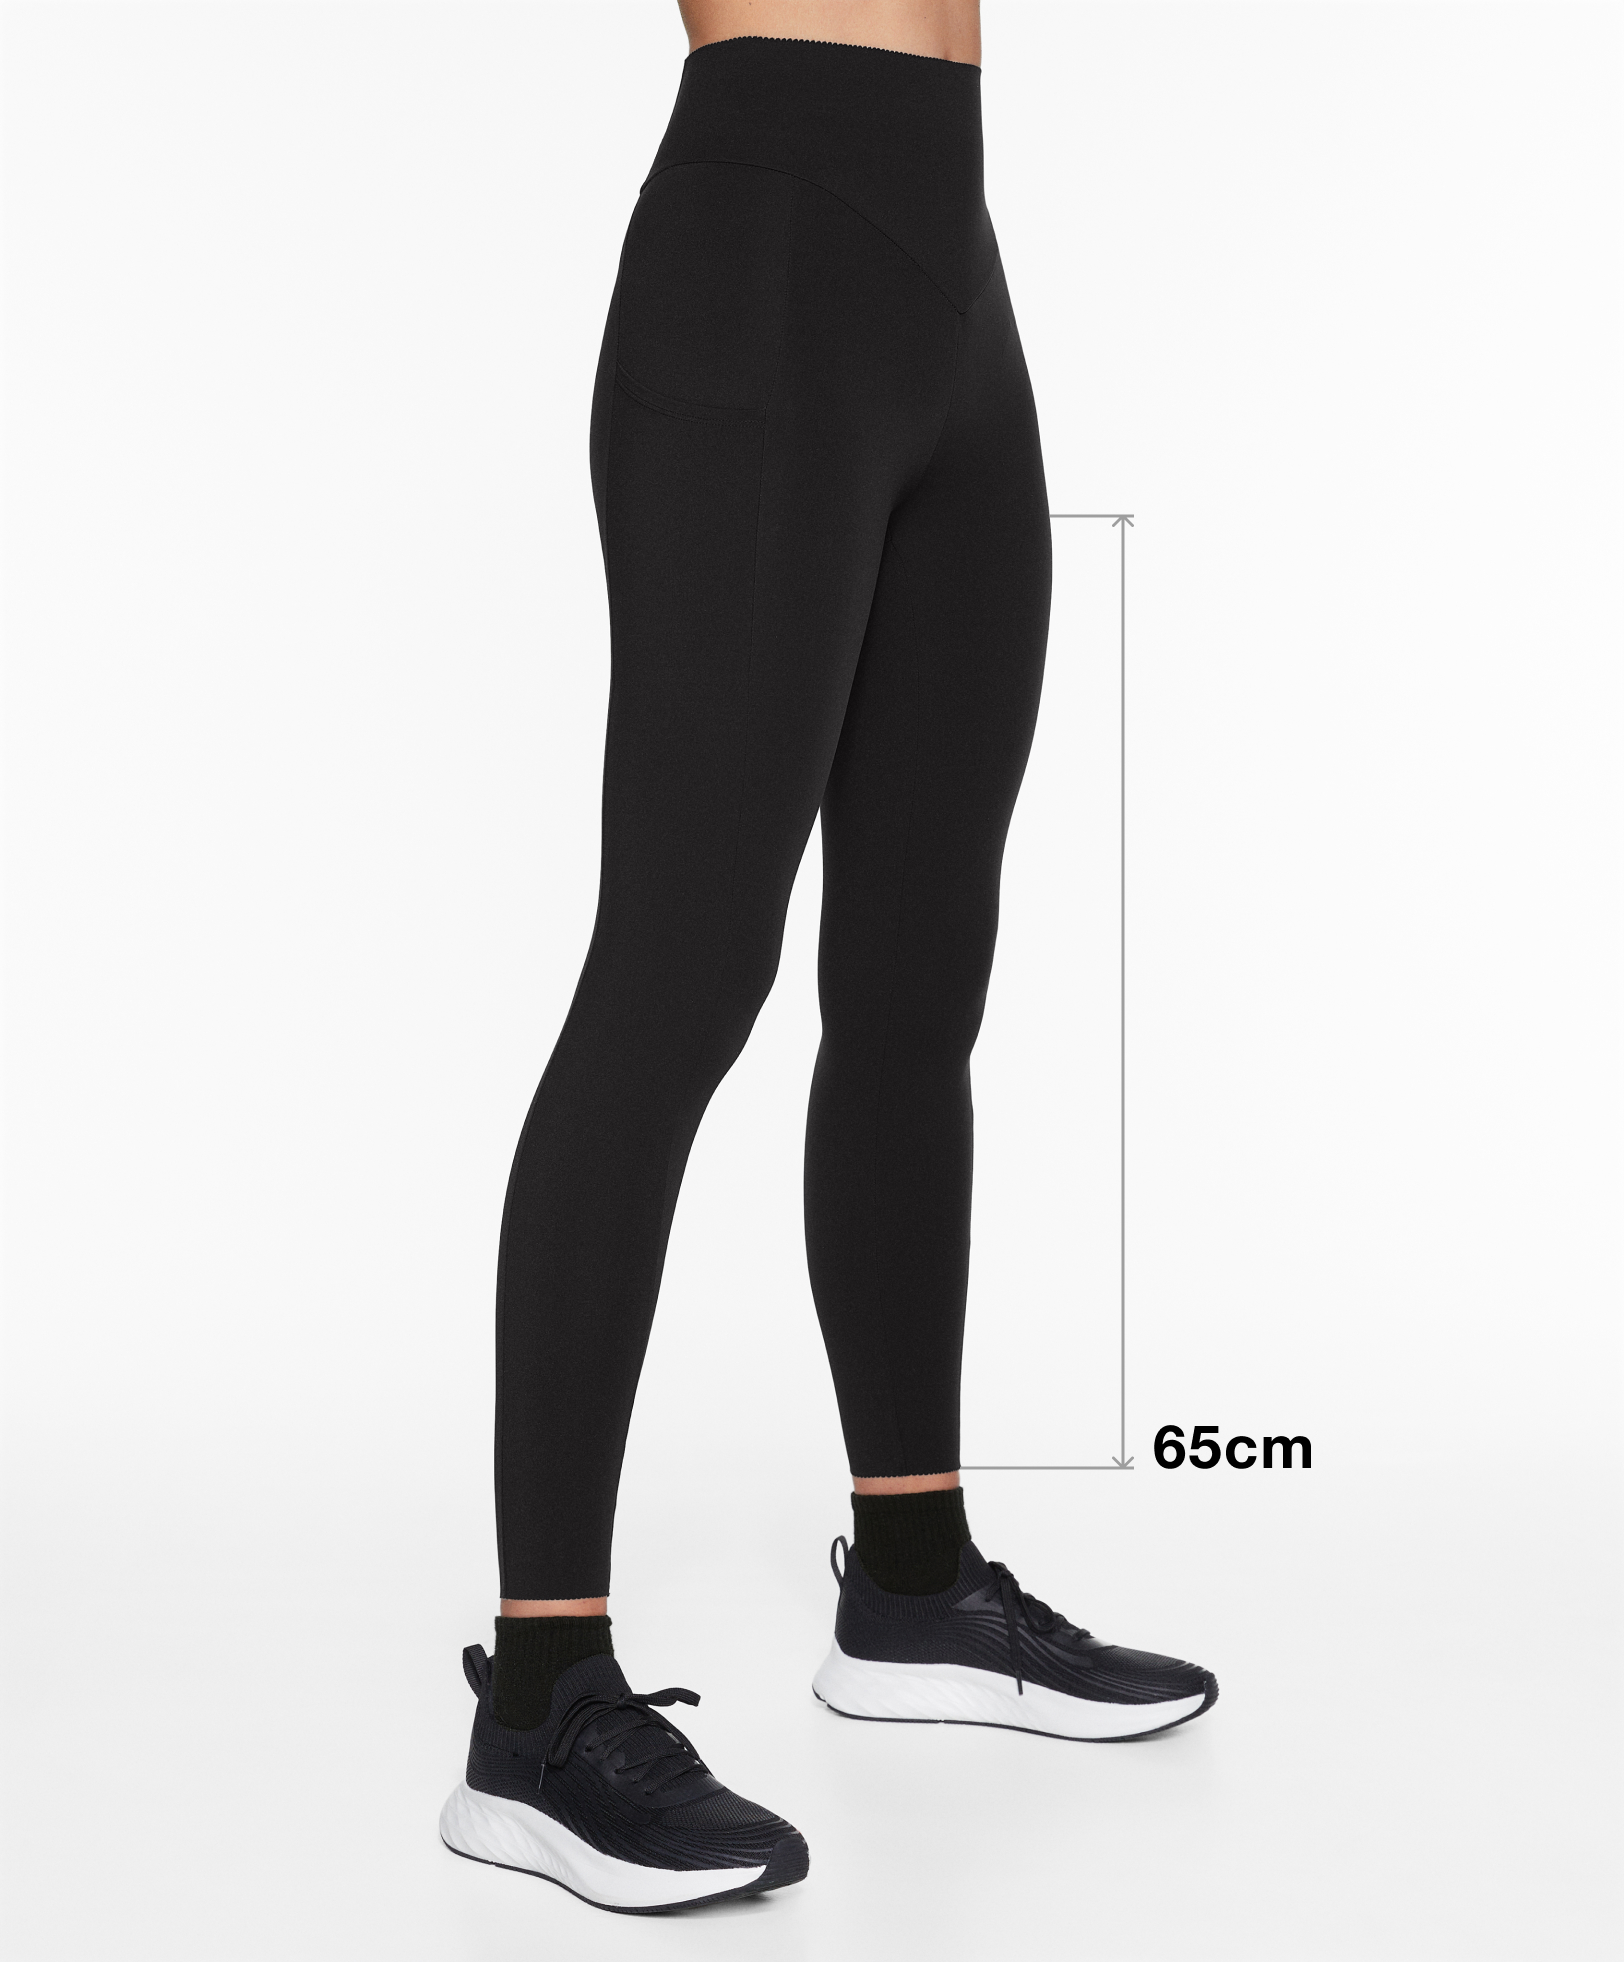 Buy the Nike Training Black Leggings NWT Size Small